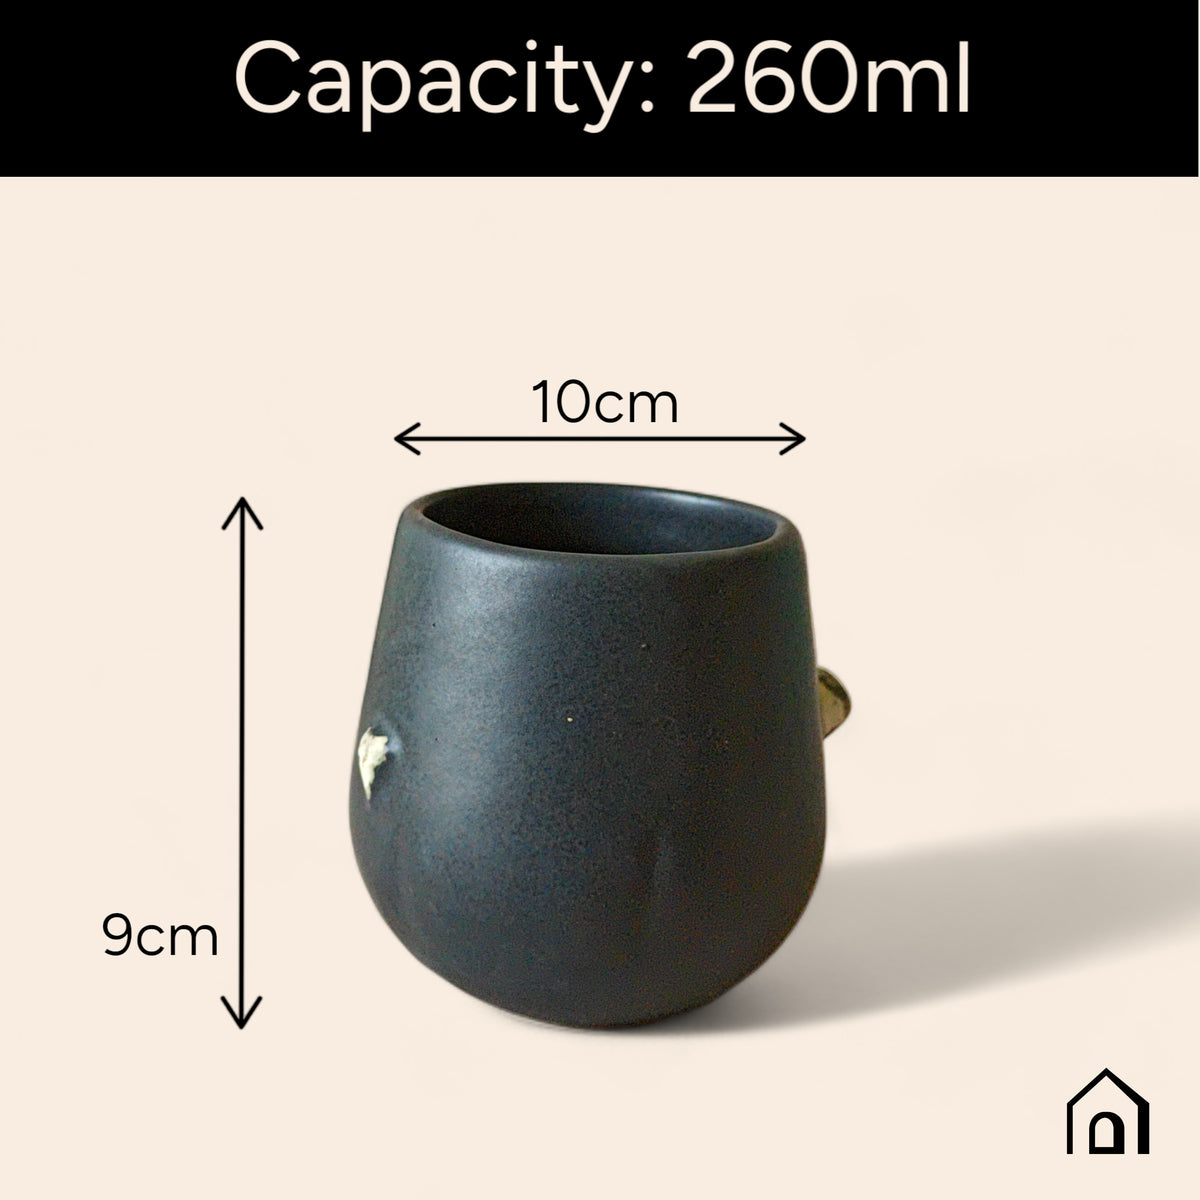 Claymistry Ceramic Kulhad Combo | Set of 2 | Blackbird | Coffee Mugs | Ceramic Combos | Tea Kettles | 10*10*9 cms | Matte